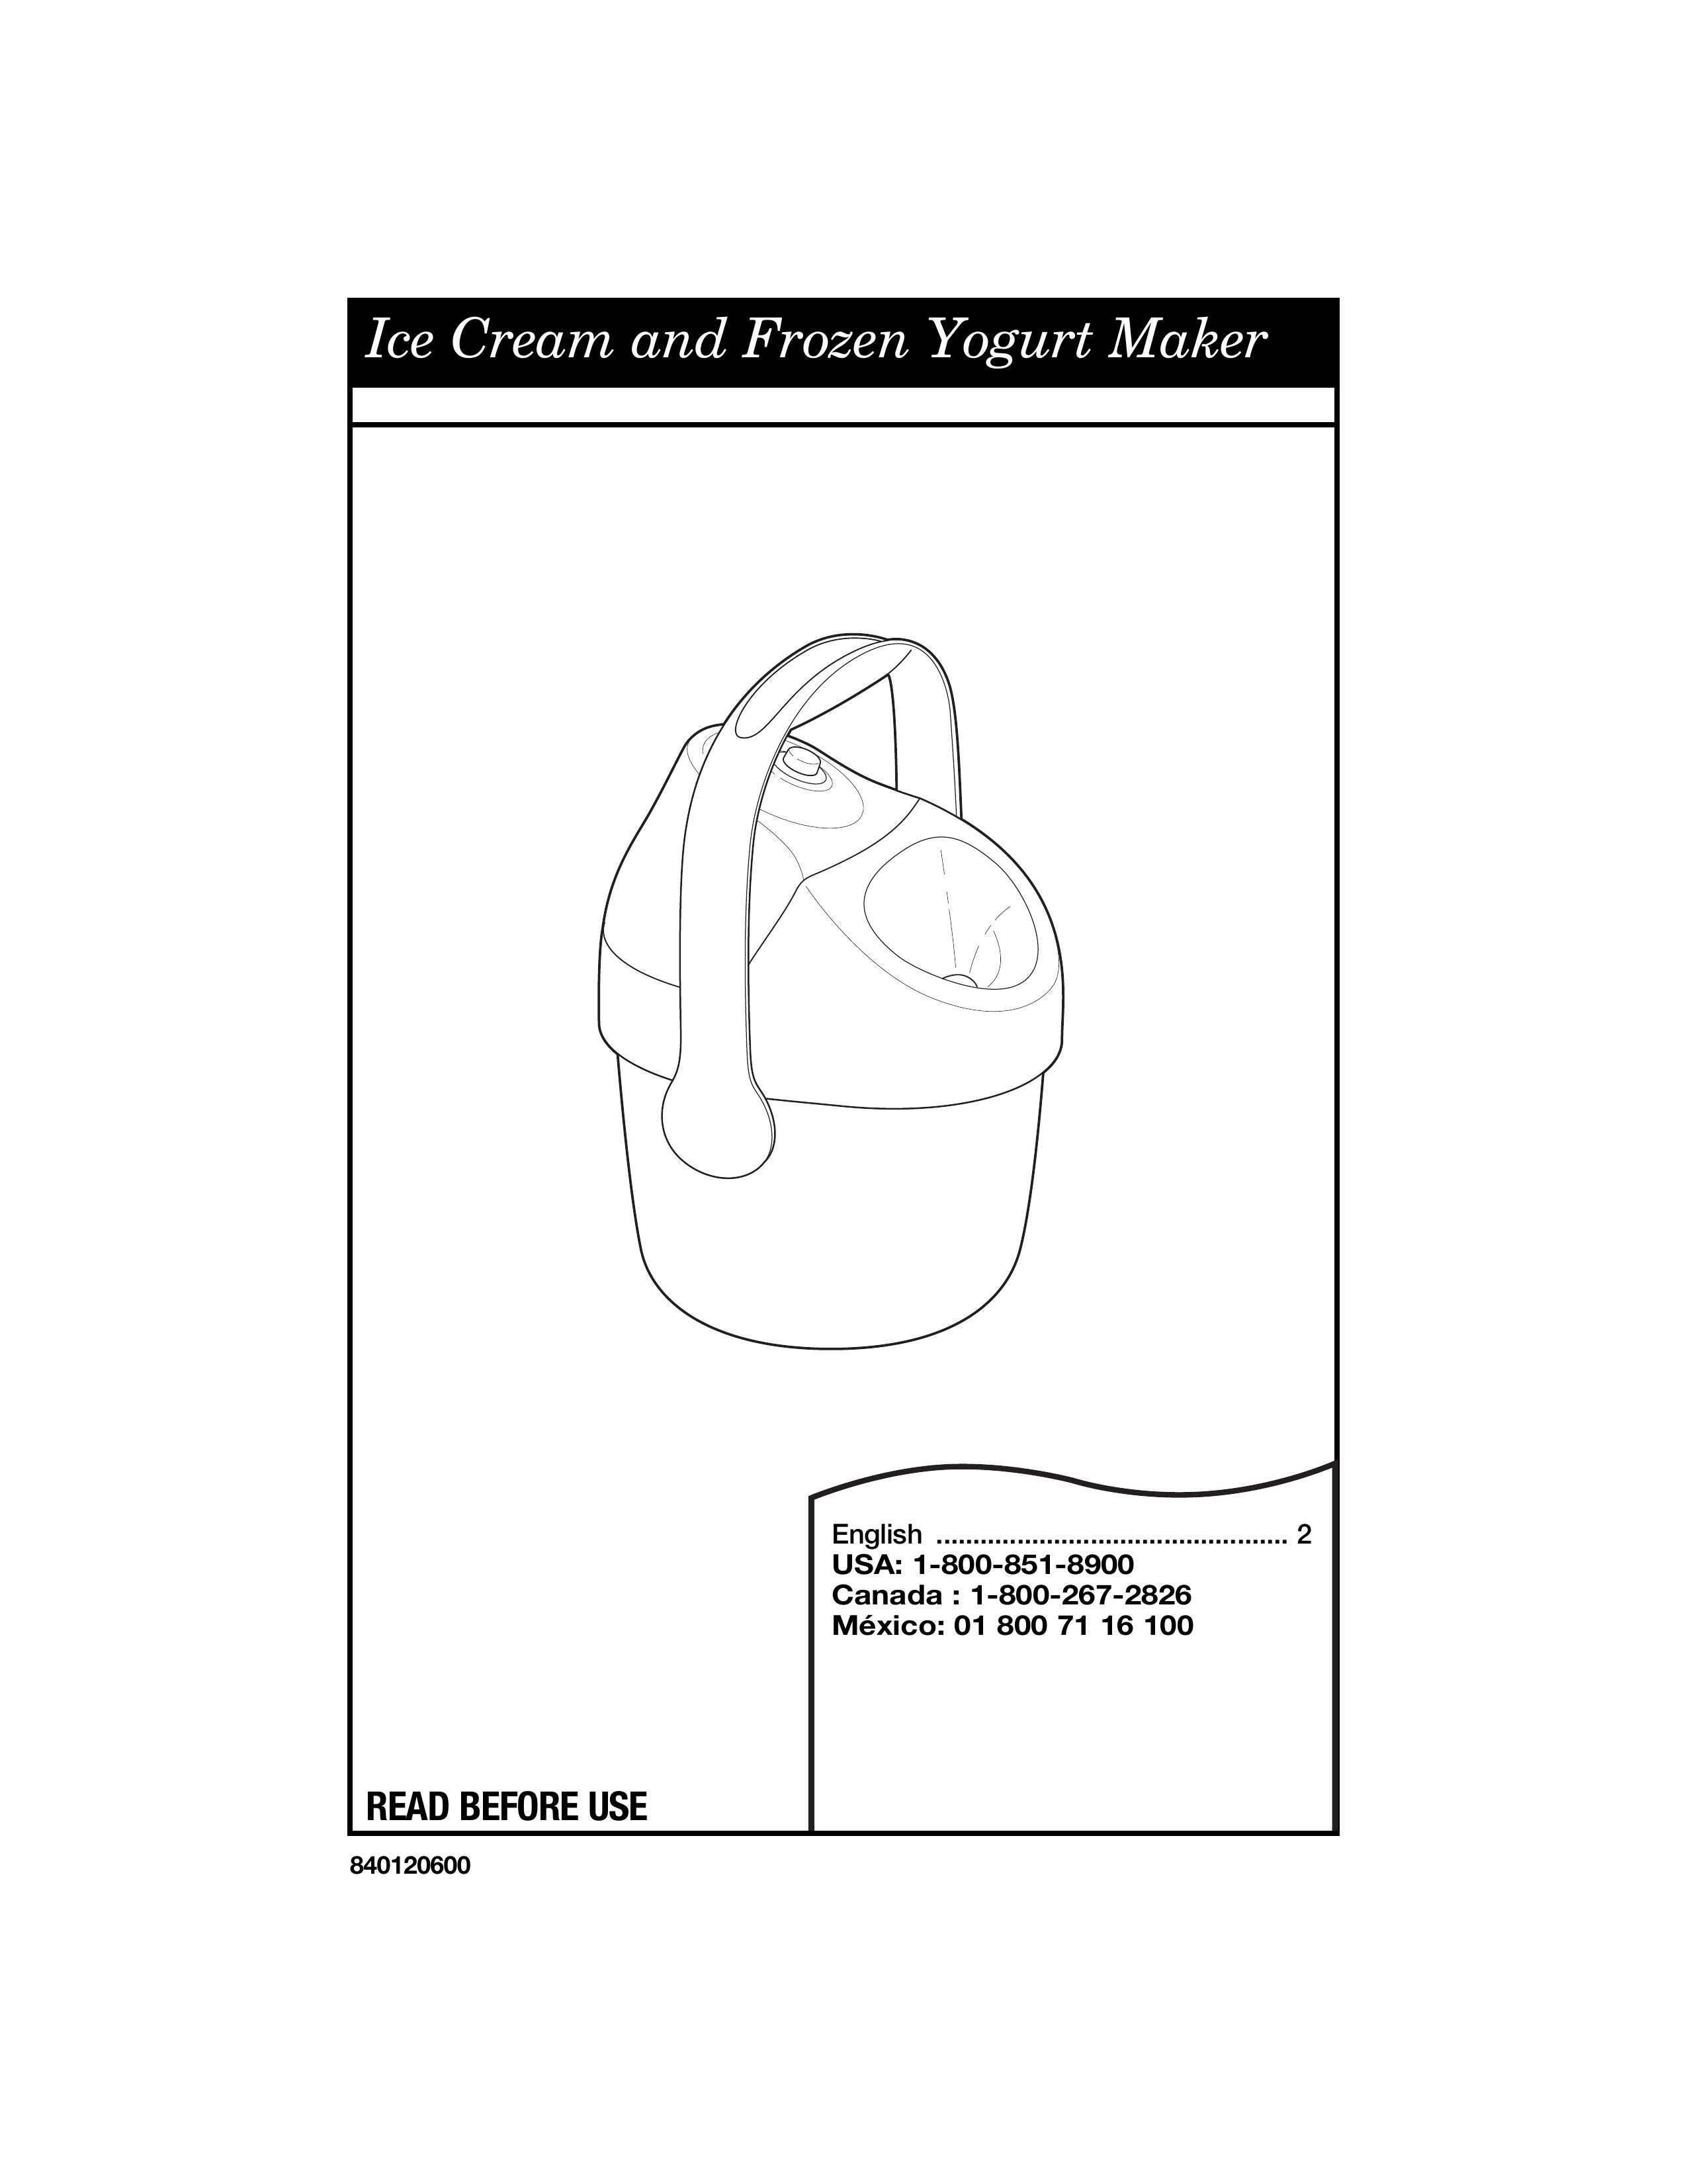 Hamilton Beach Ice Cream and Frozen Yogurt Maker Yogurt Maker User Manual